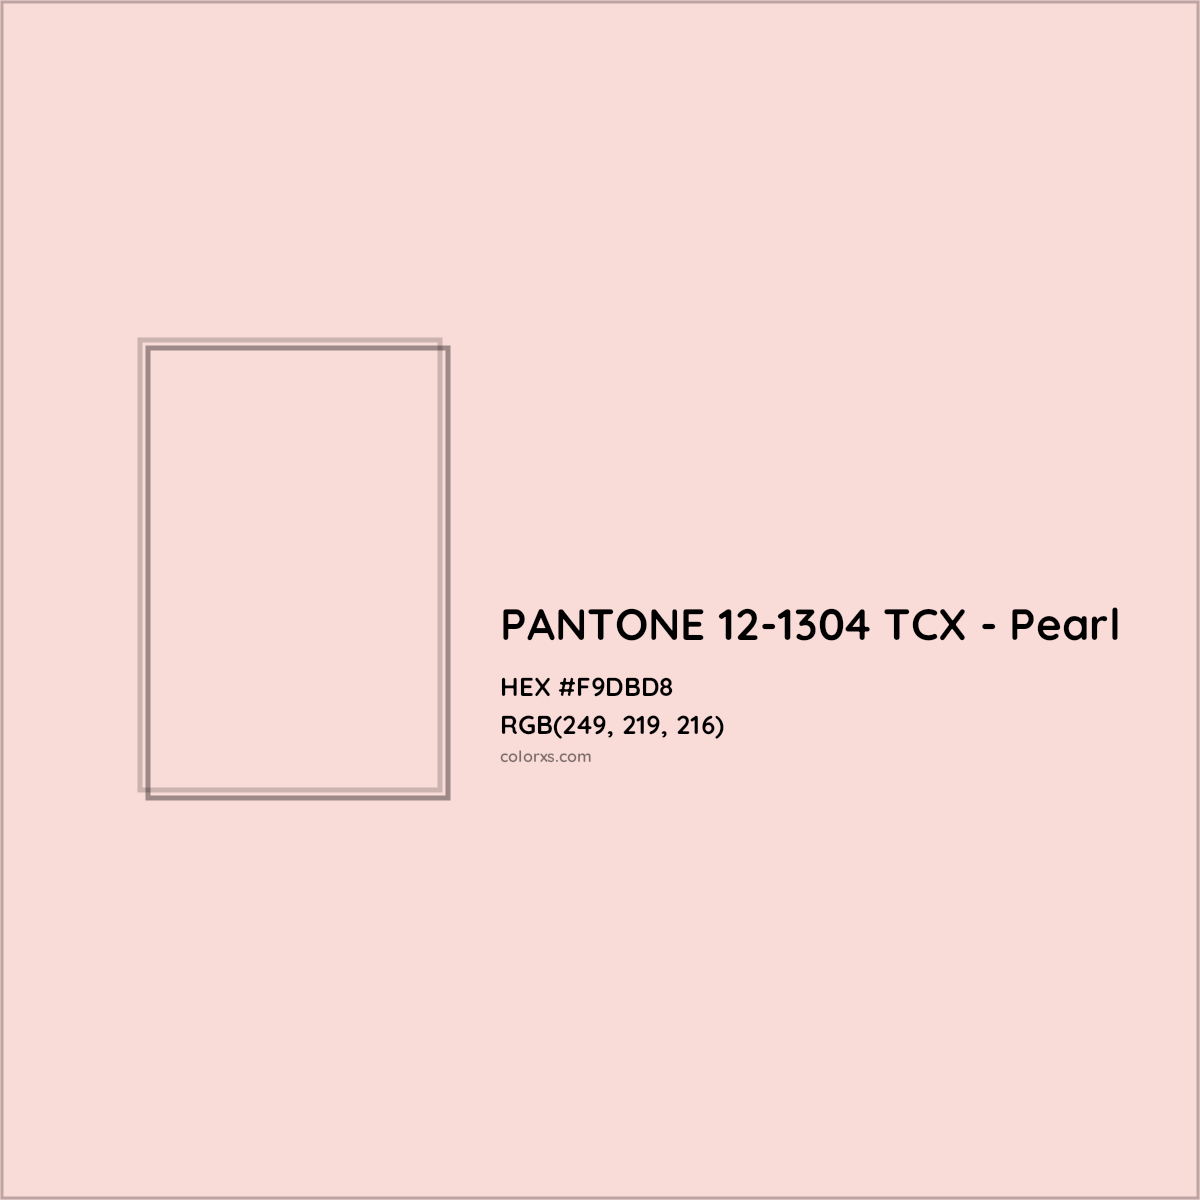 HEX #F9DBD8 PANTONE 12-1304 TCX - Pearl CMS Pantone TCX - Color Code